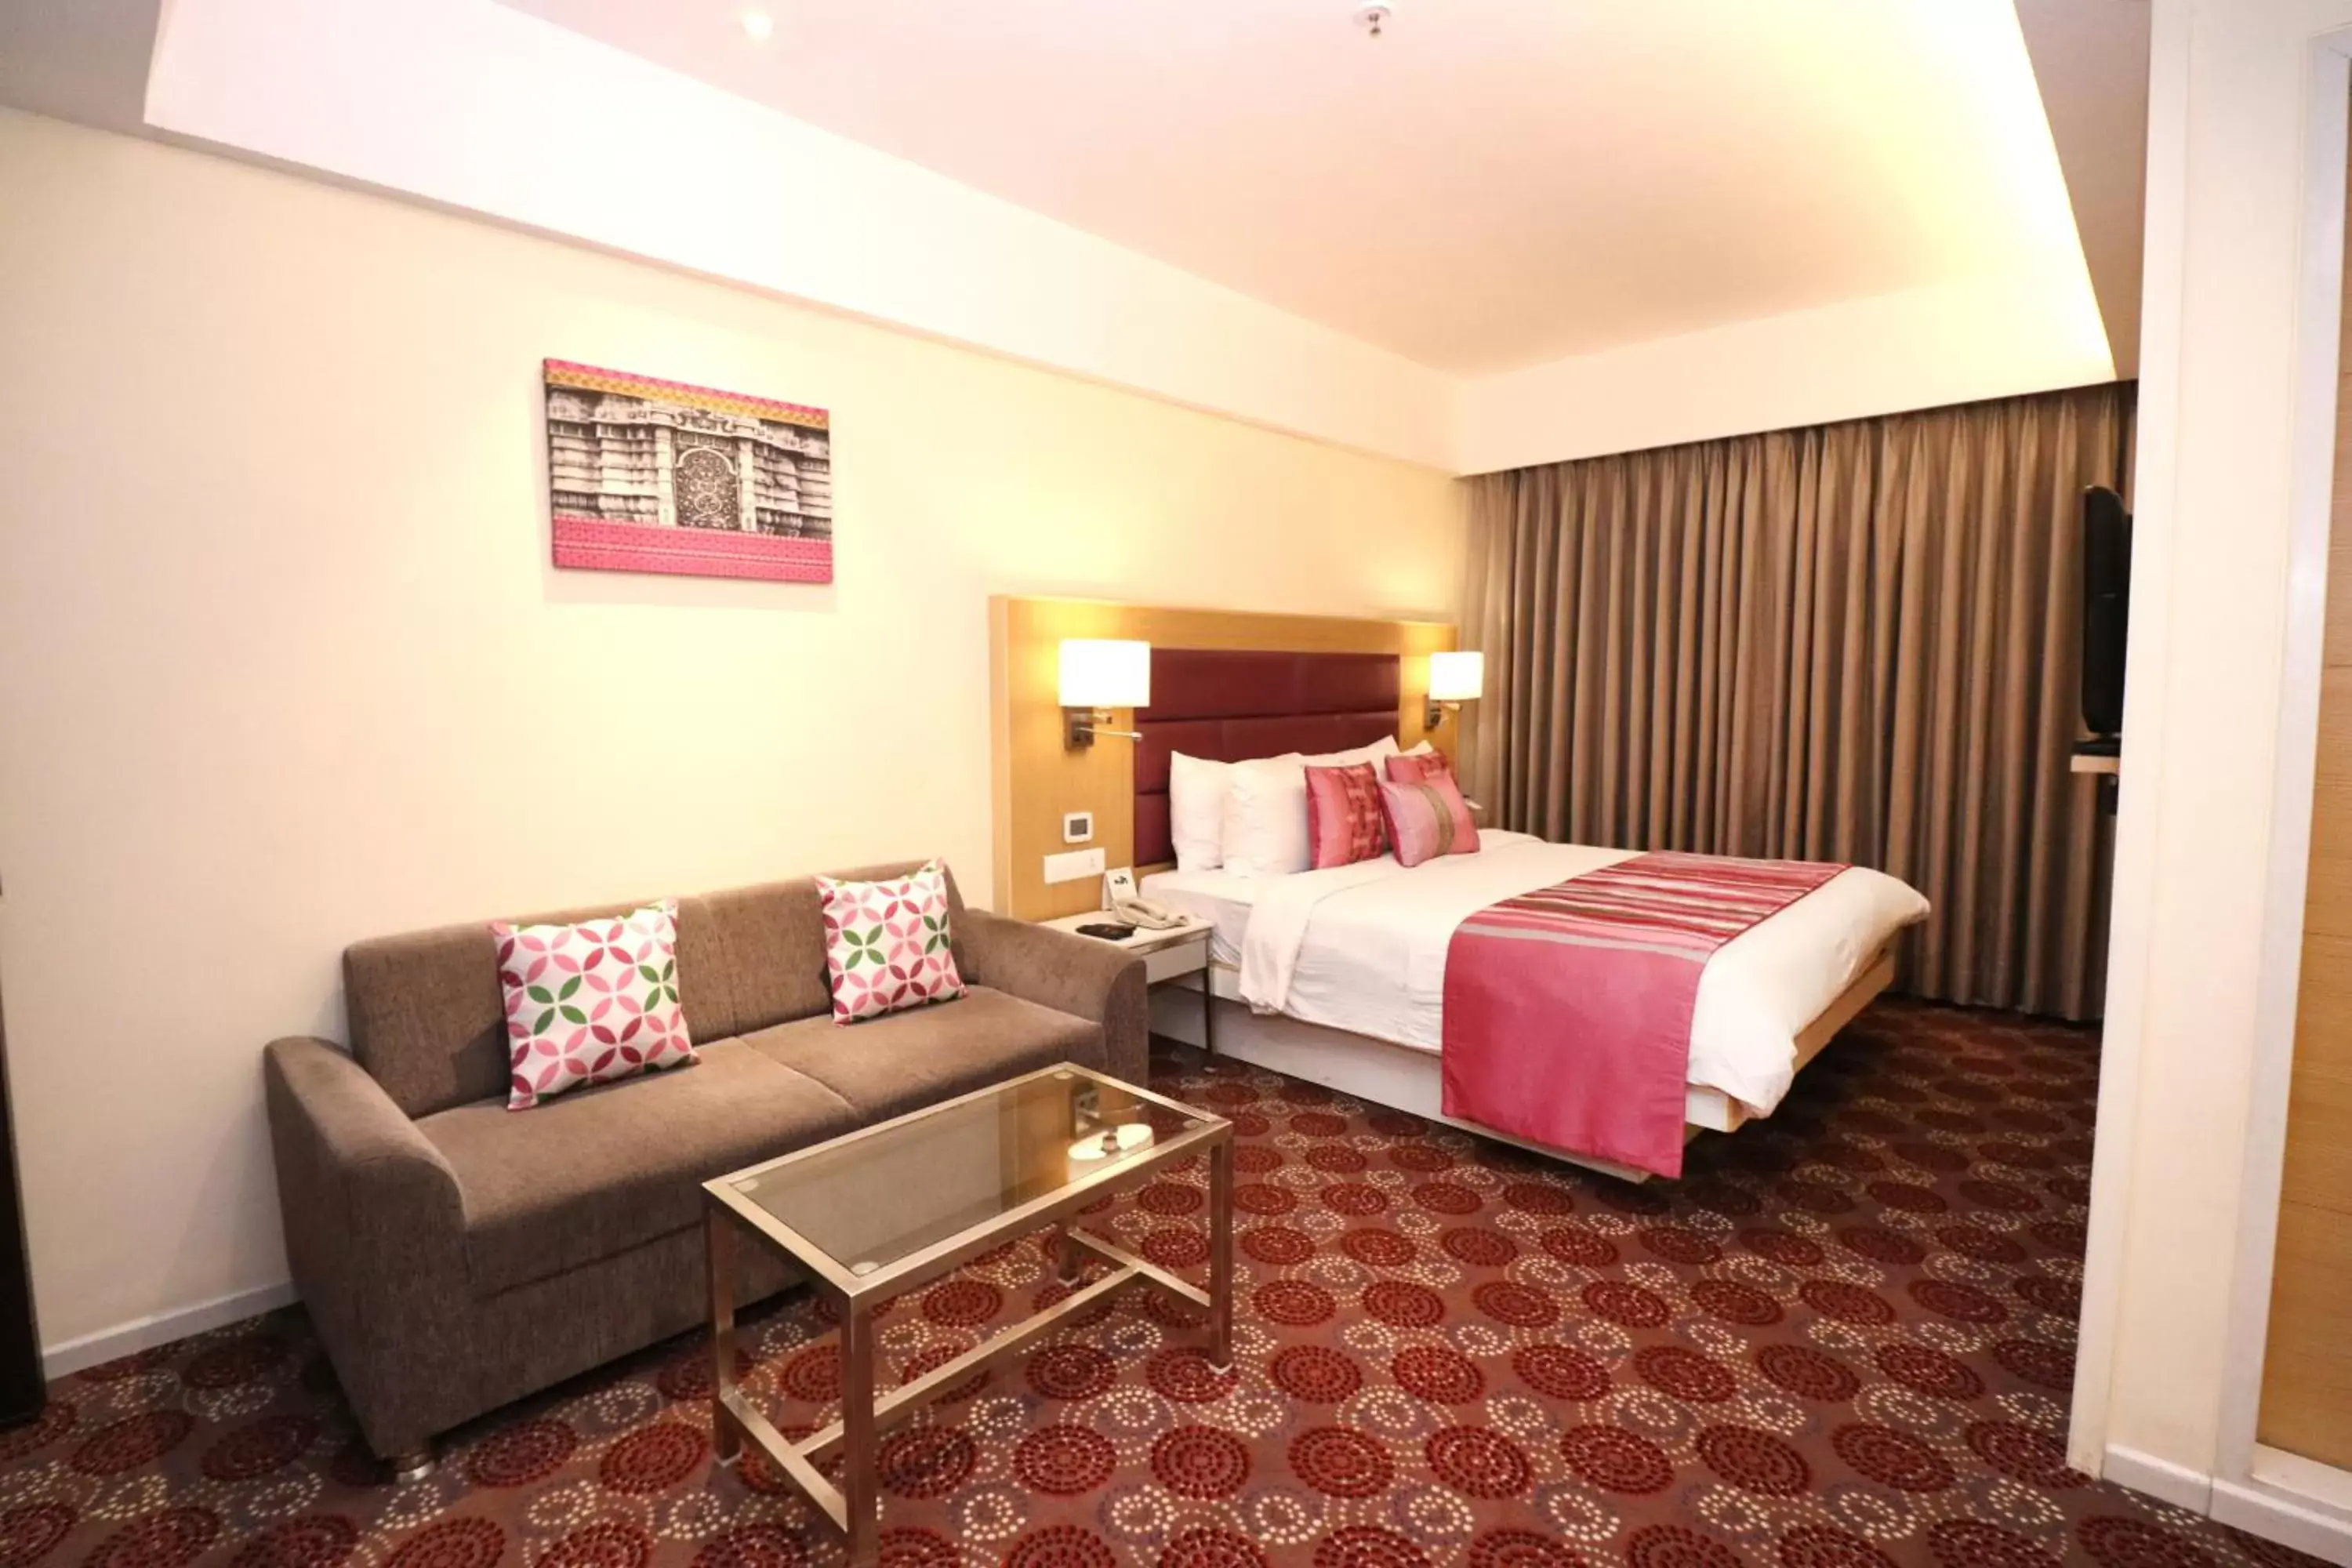 Bedroom in Fortune Park Galaxy, Vapi - Member ITC's Hotel Group